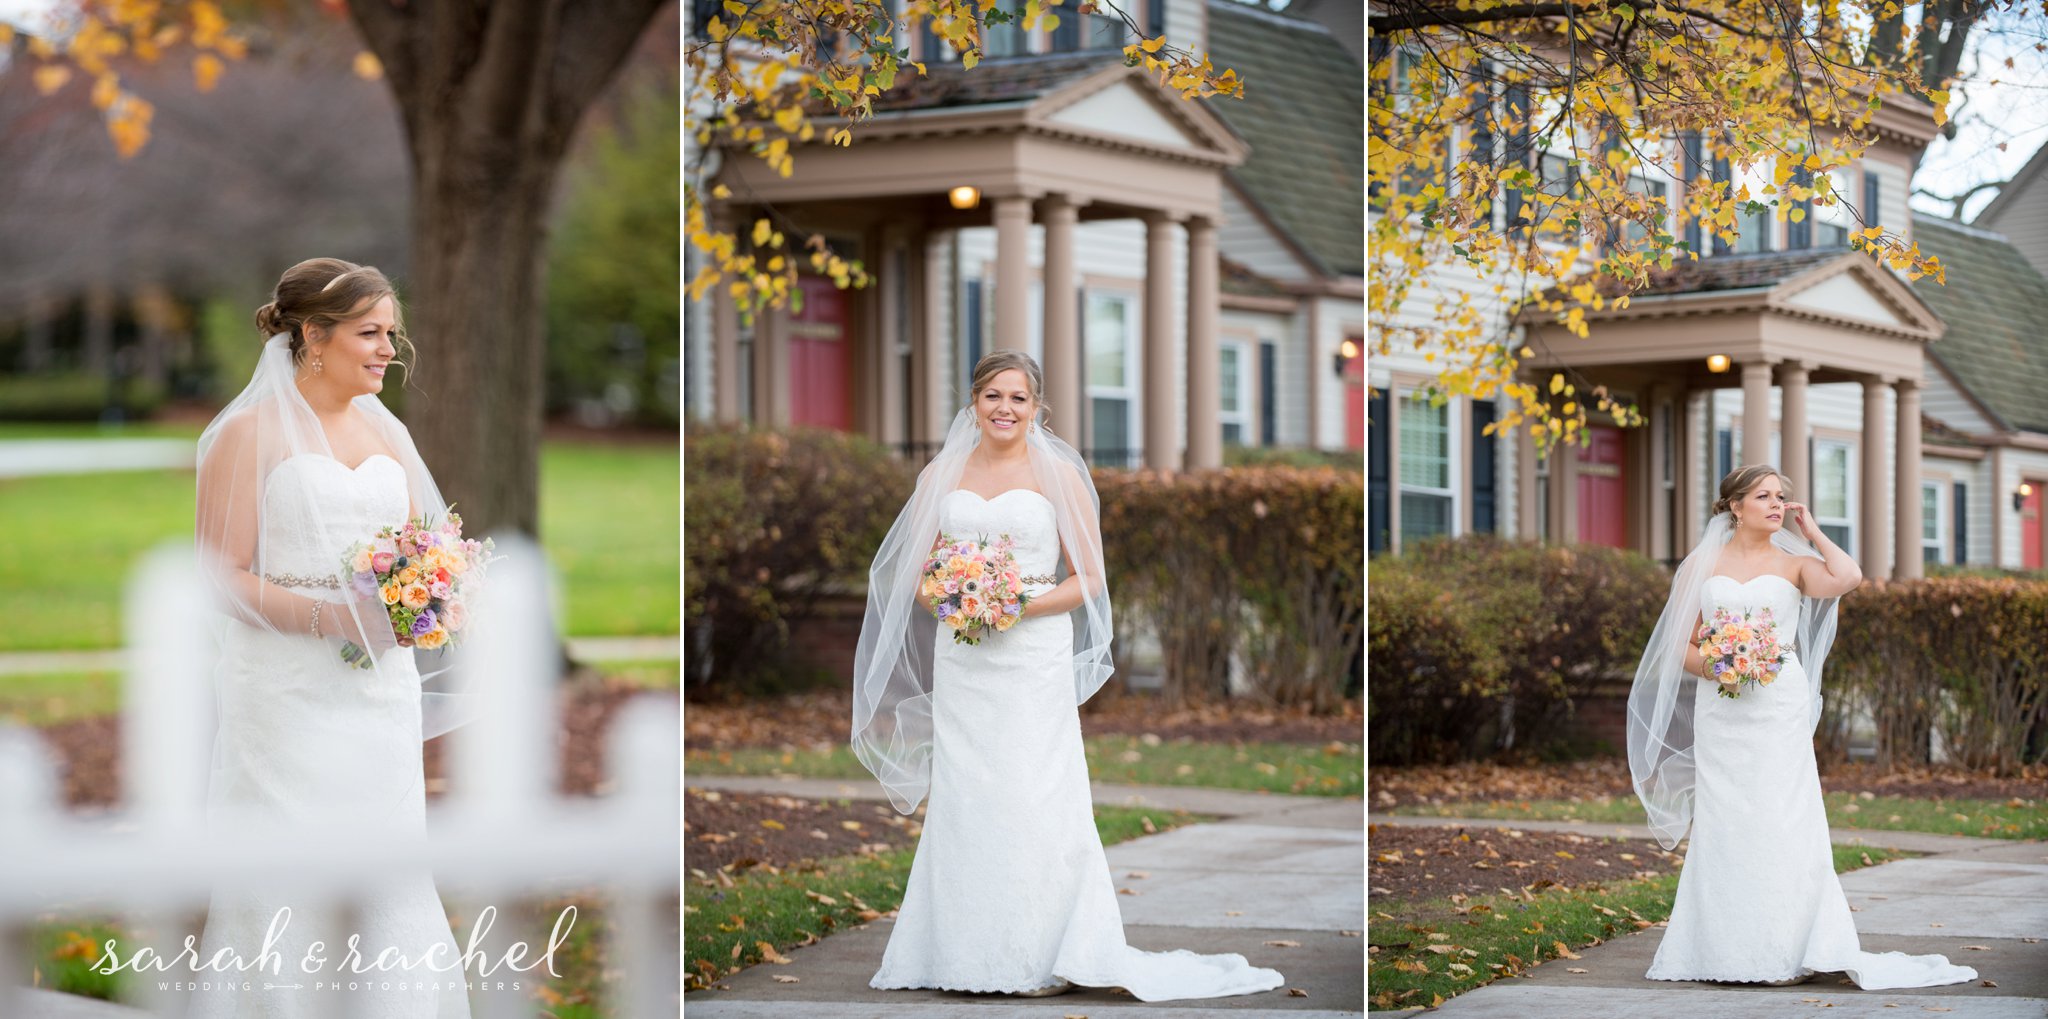 Bridal Portraits | Dearborn Inn Wedding | Detroit Michigan | Sarah and Rachel Wedding Photographers